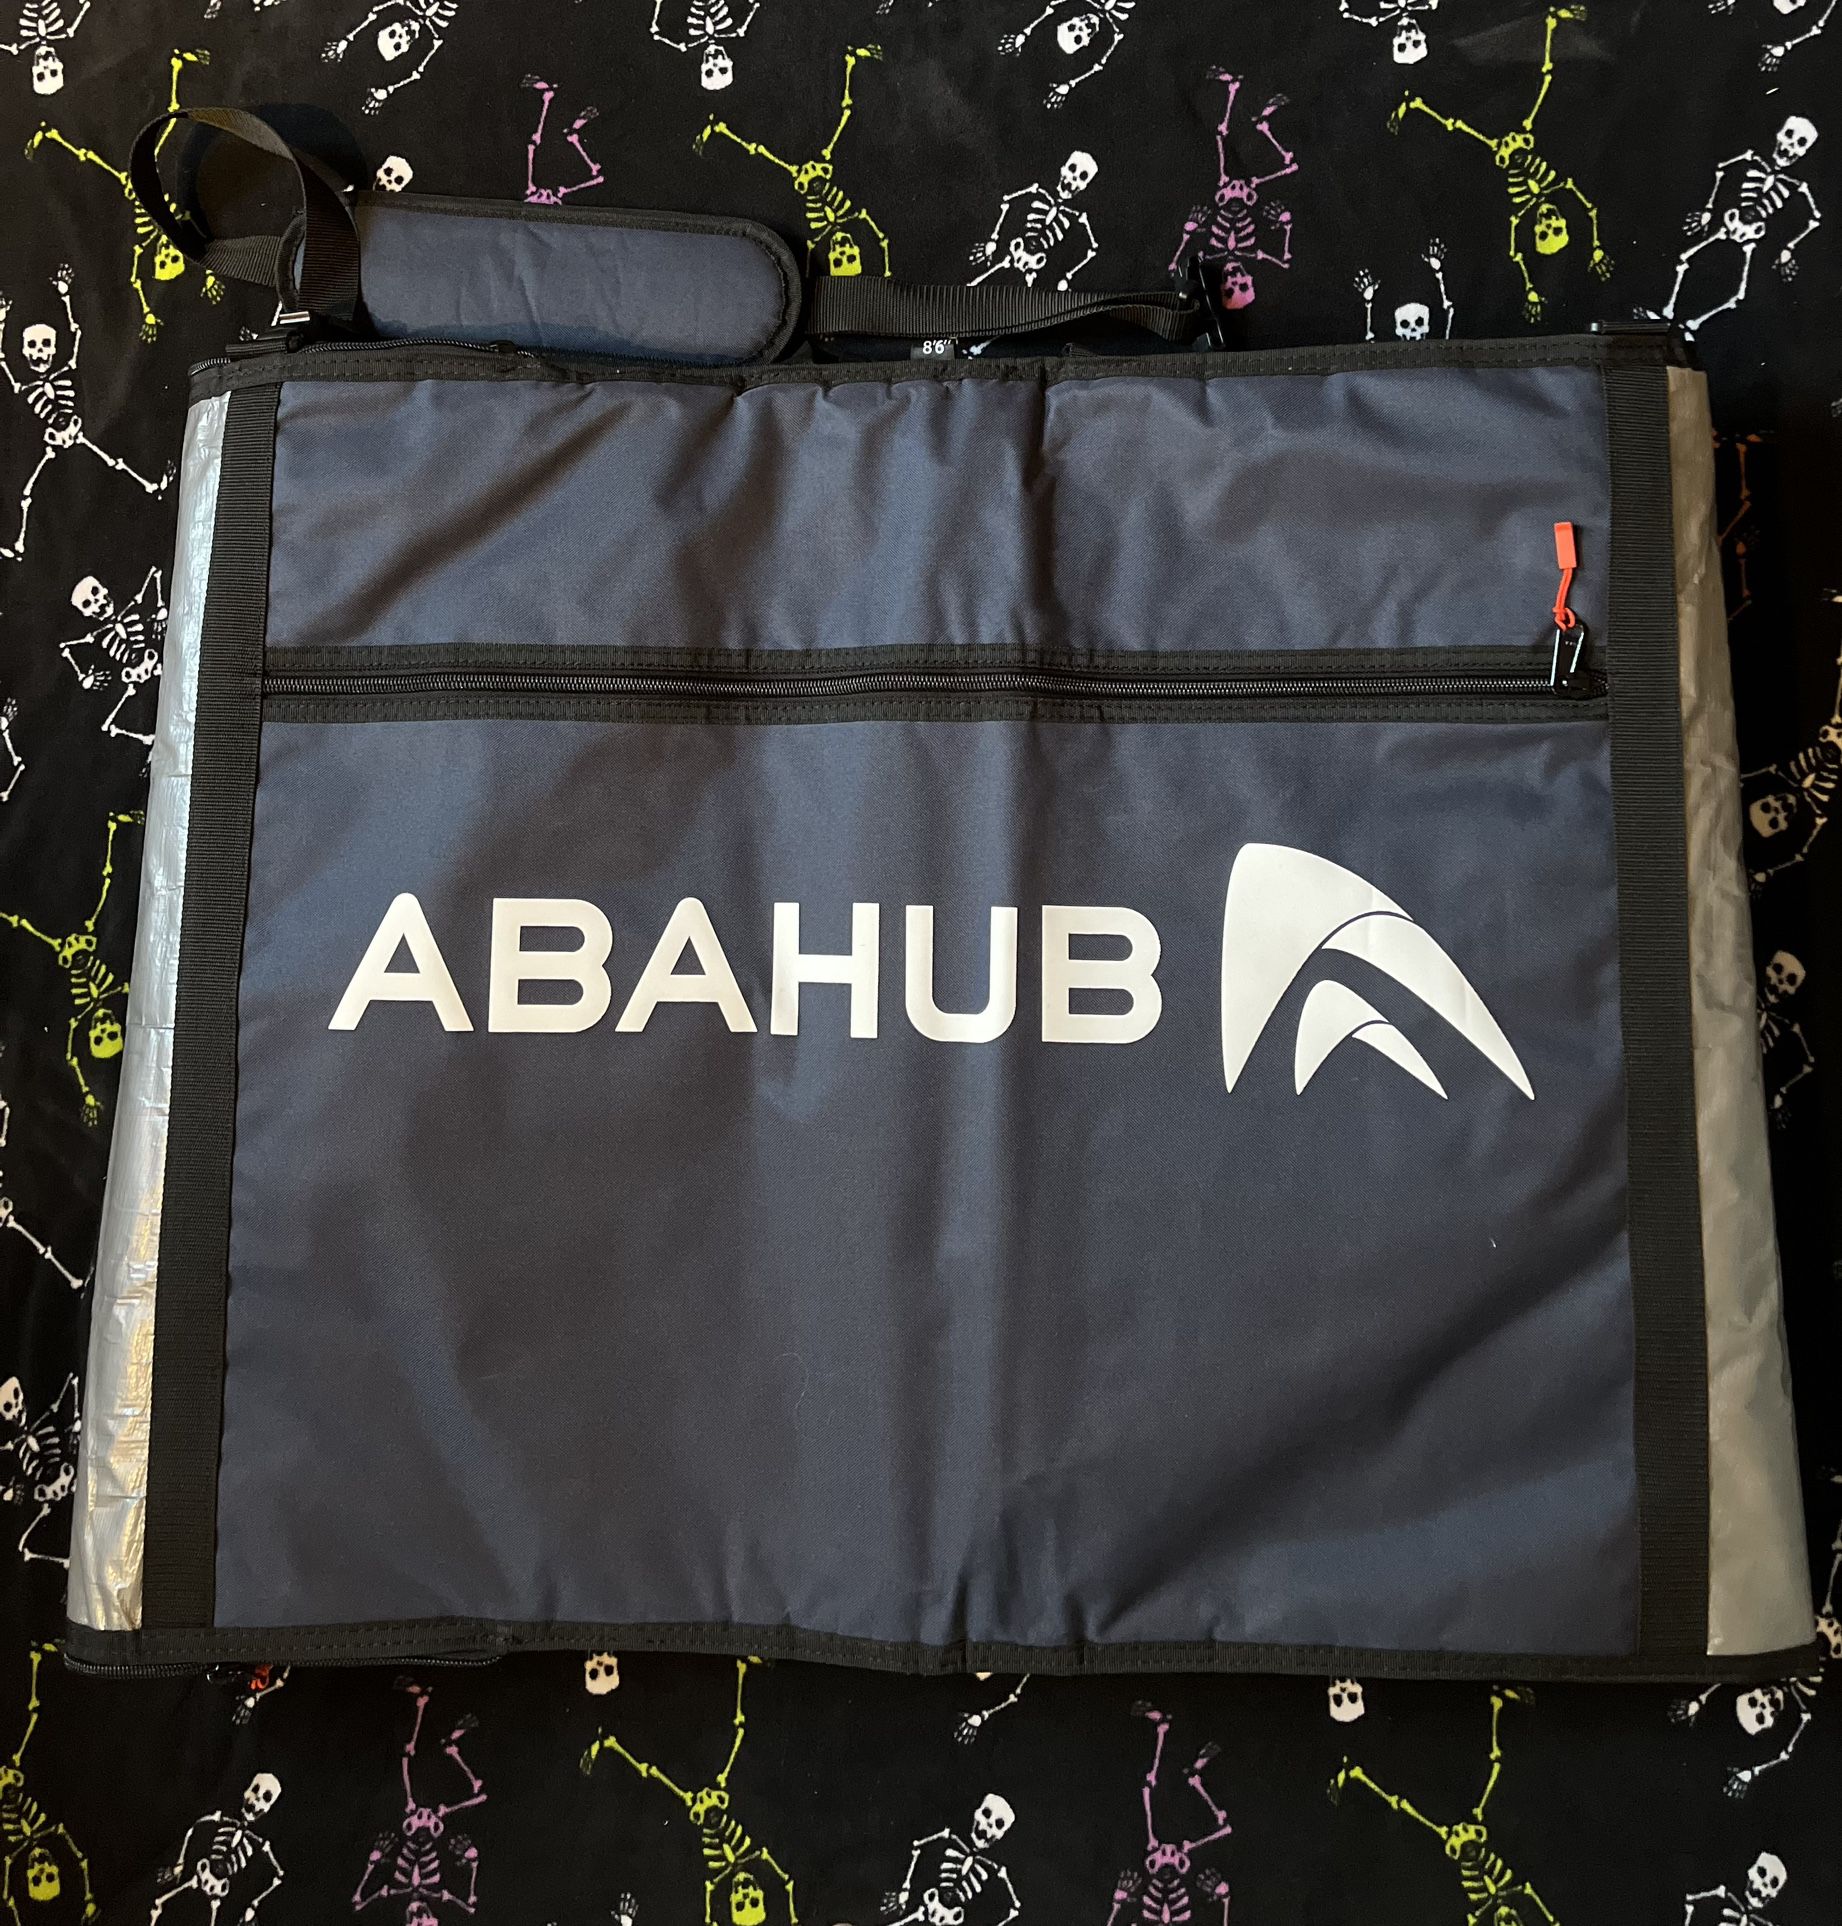 ABAHUB 8.6 SURFBOARD BAG!